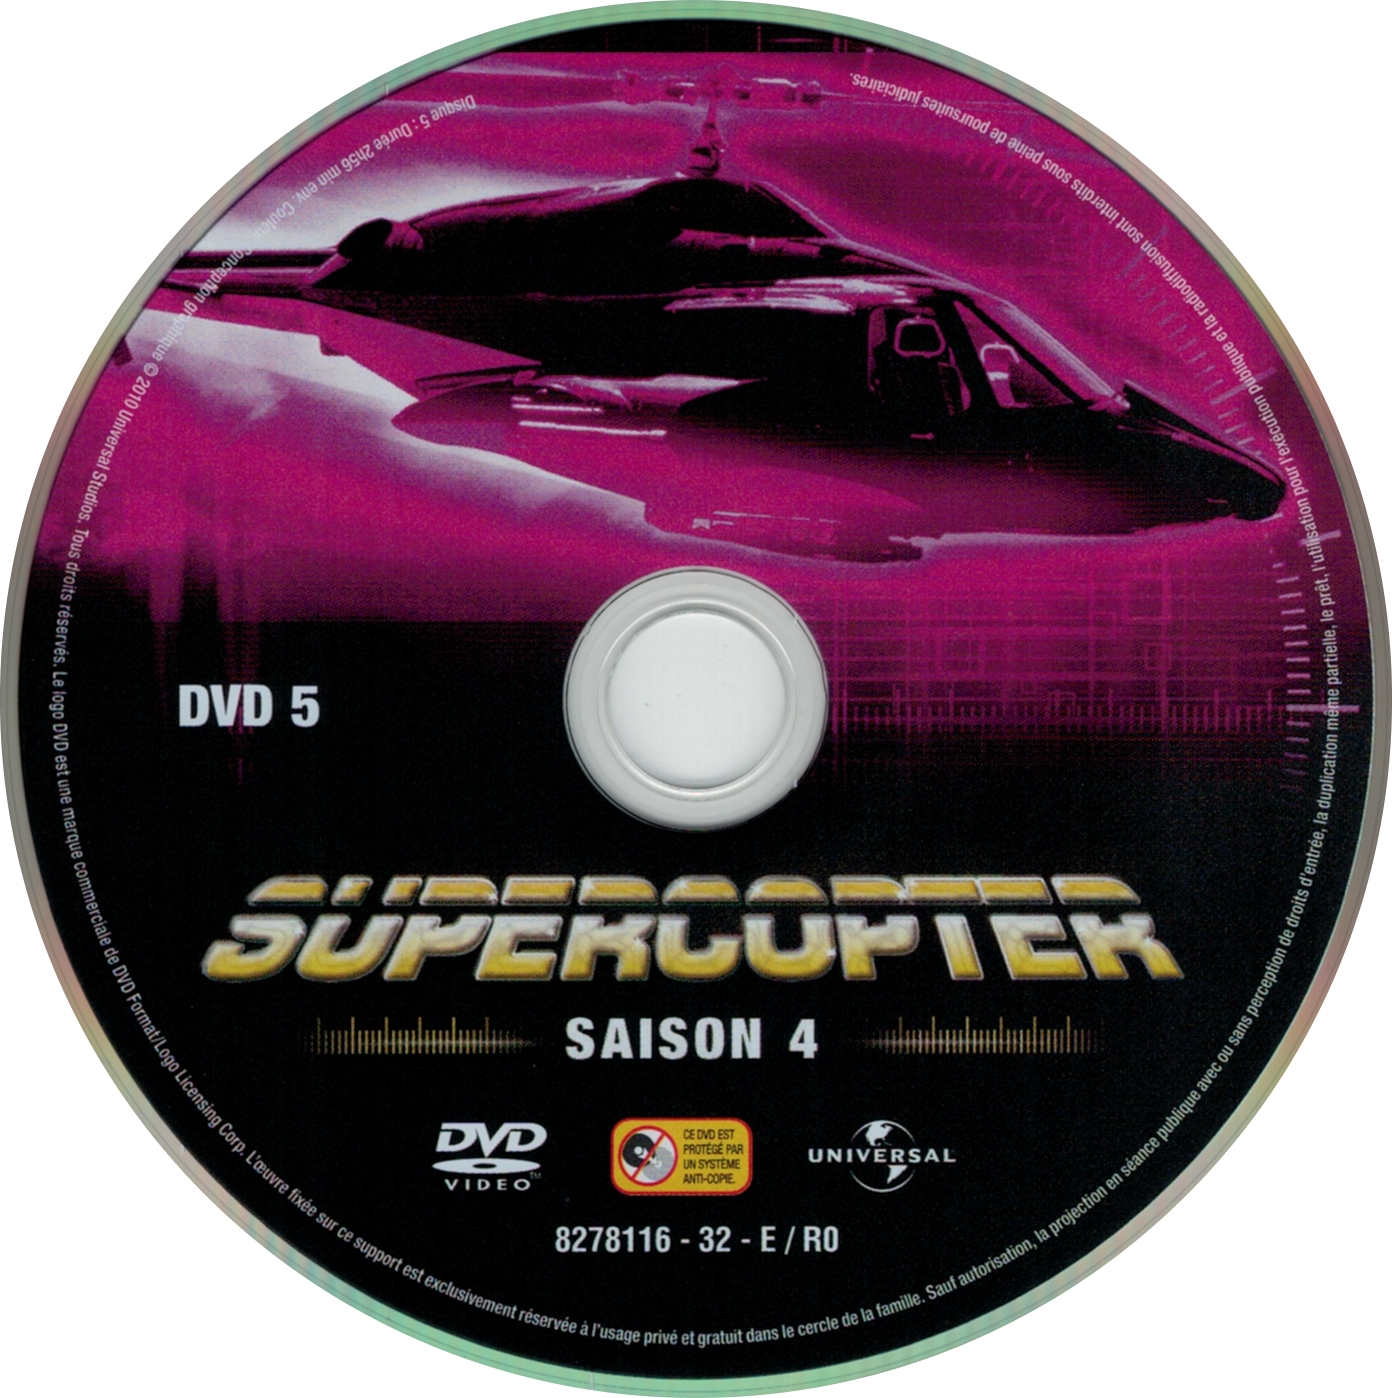 Supercopter Saison 4 DVD 5